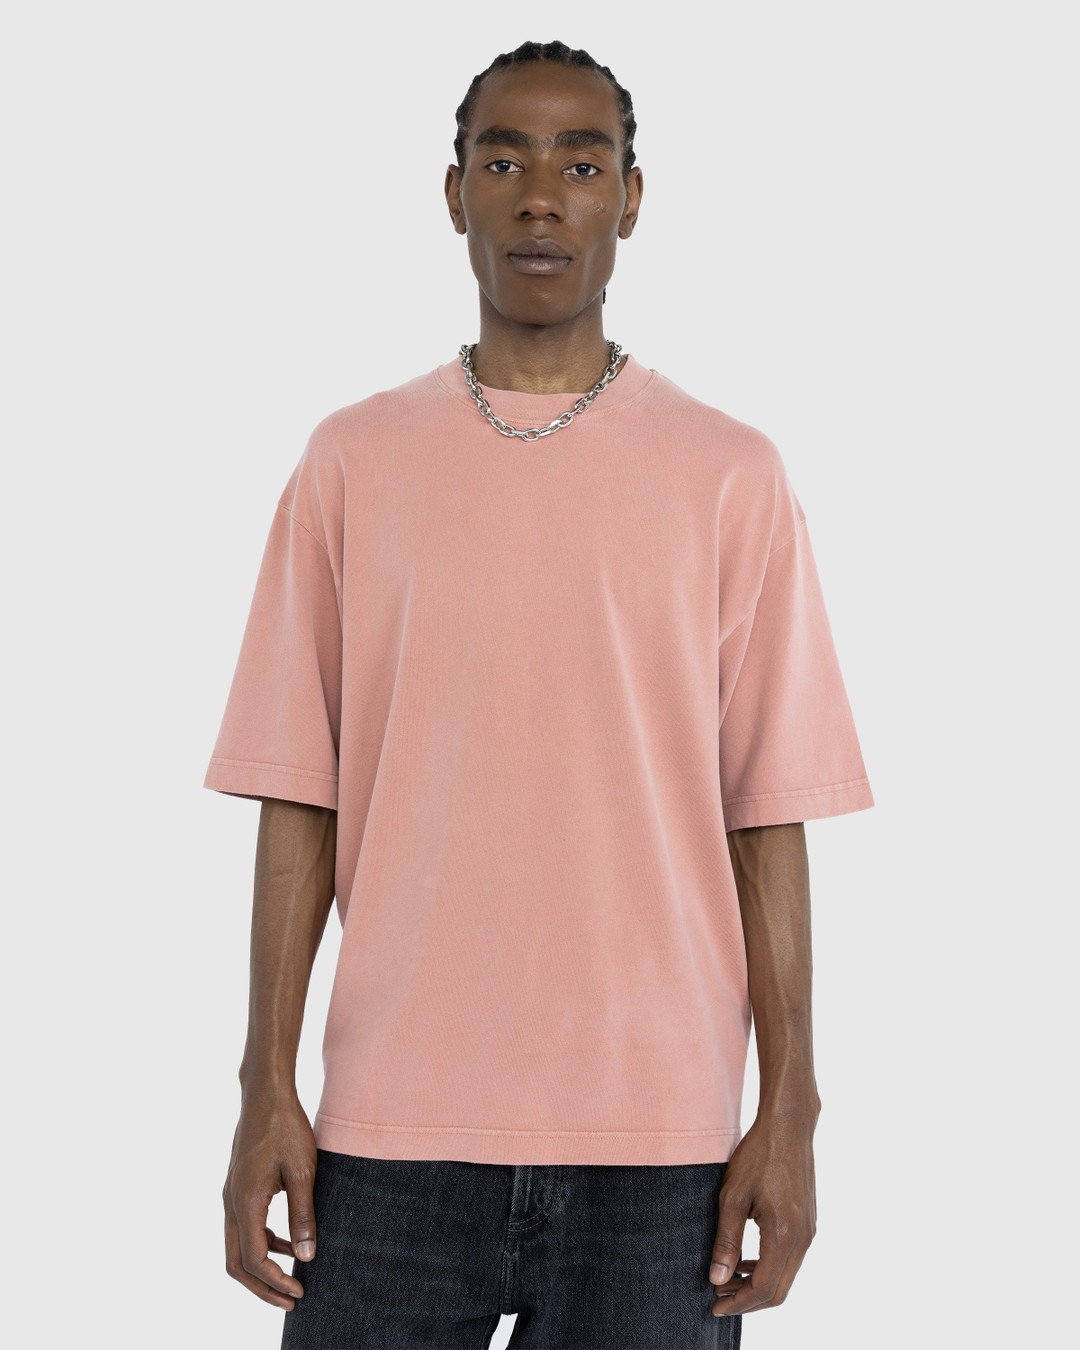 Acne Studios – Garment-Dyed T-Shirt Vintage Pink | Highsnobiety Shop